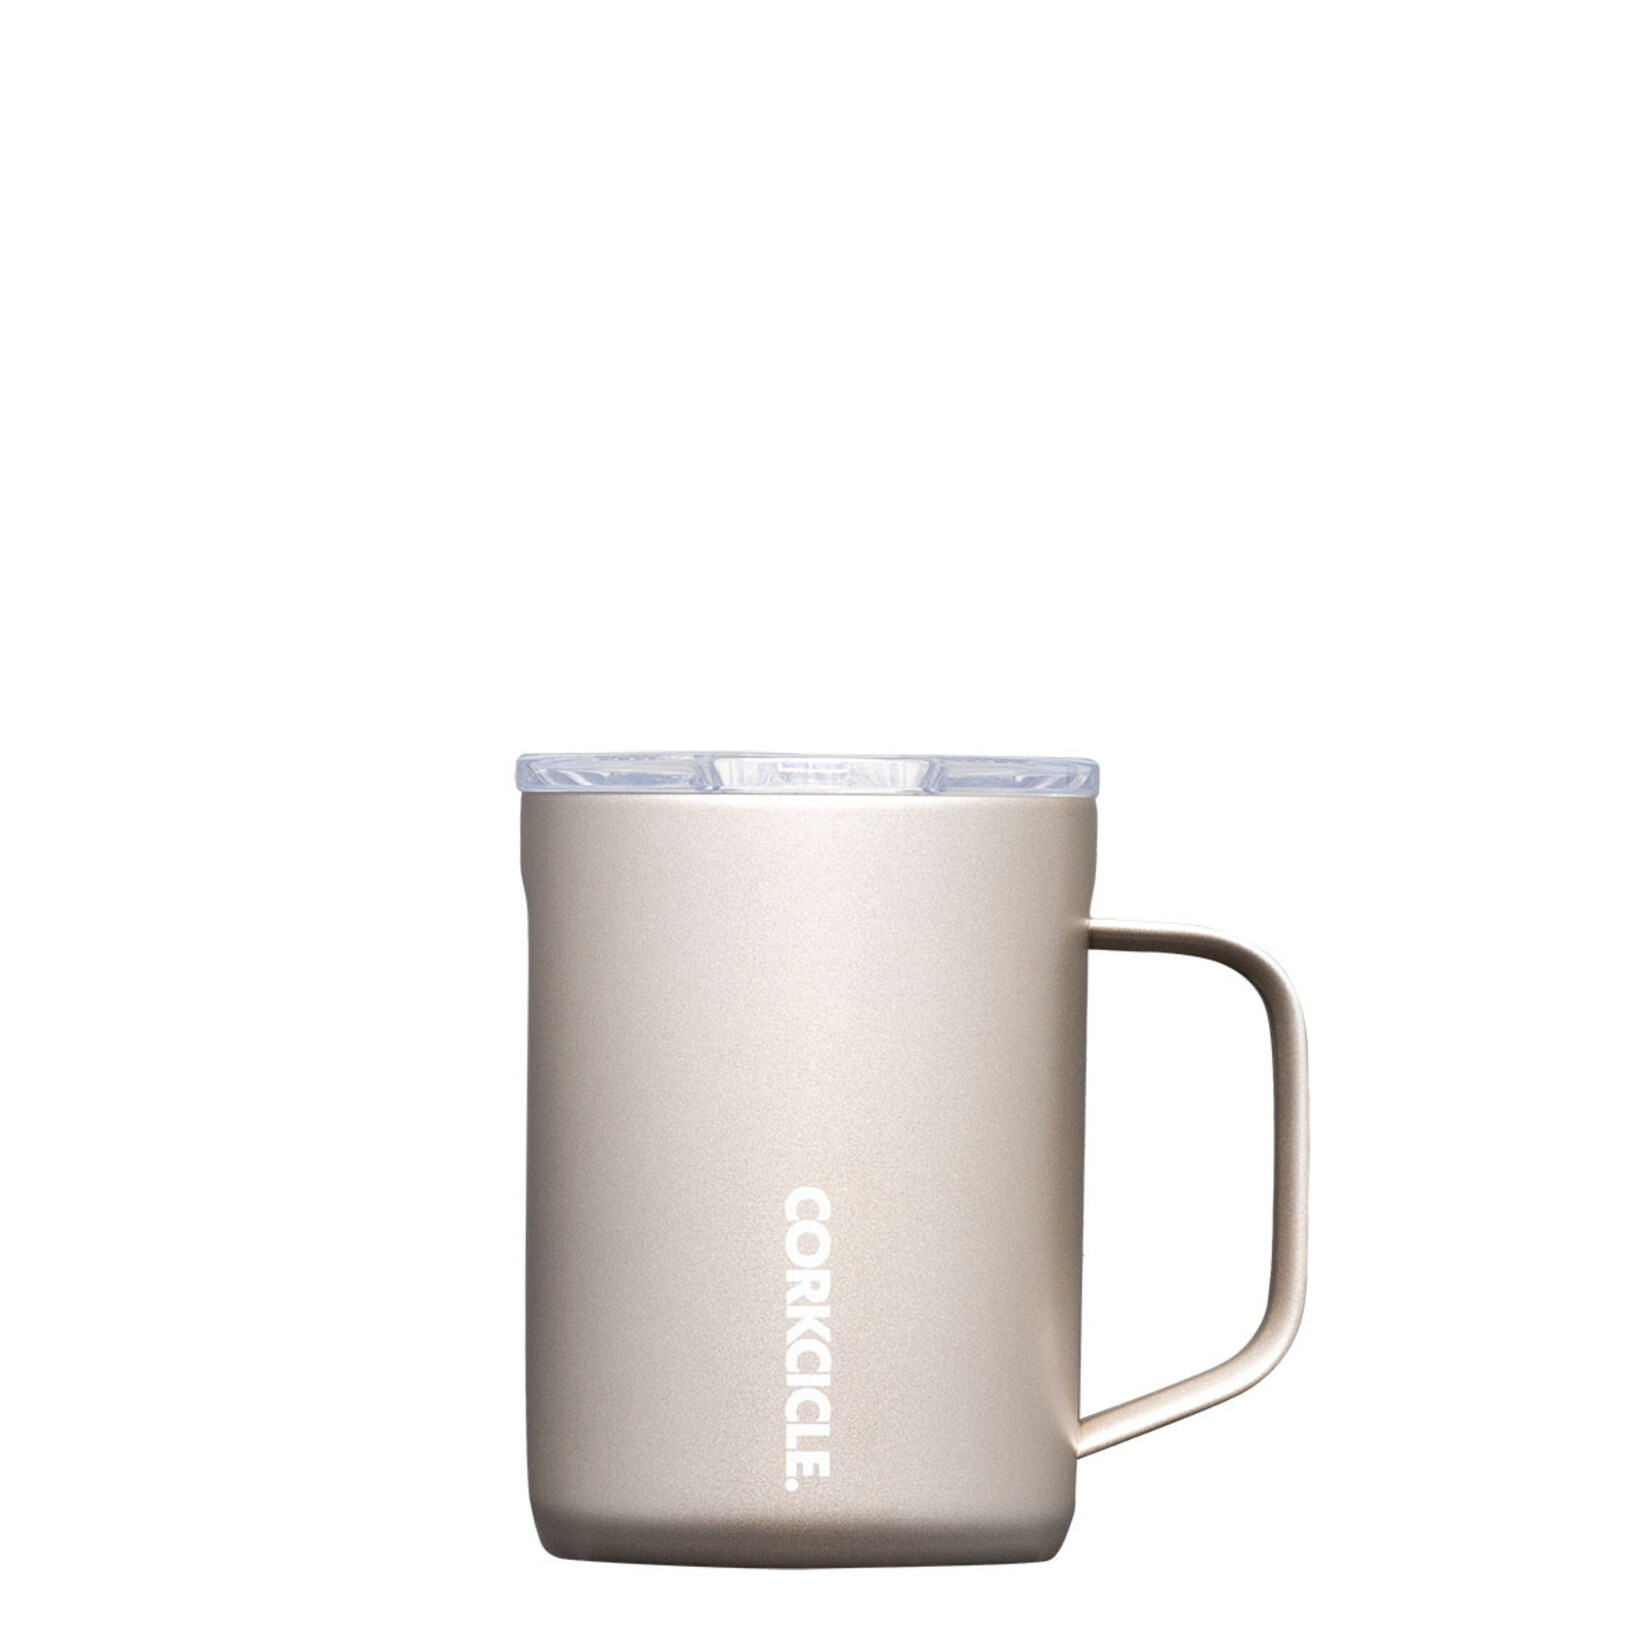 Corkcicle Corkcicle - 16oz Ceramic Mug - Latte w/Oat Milk